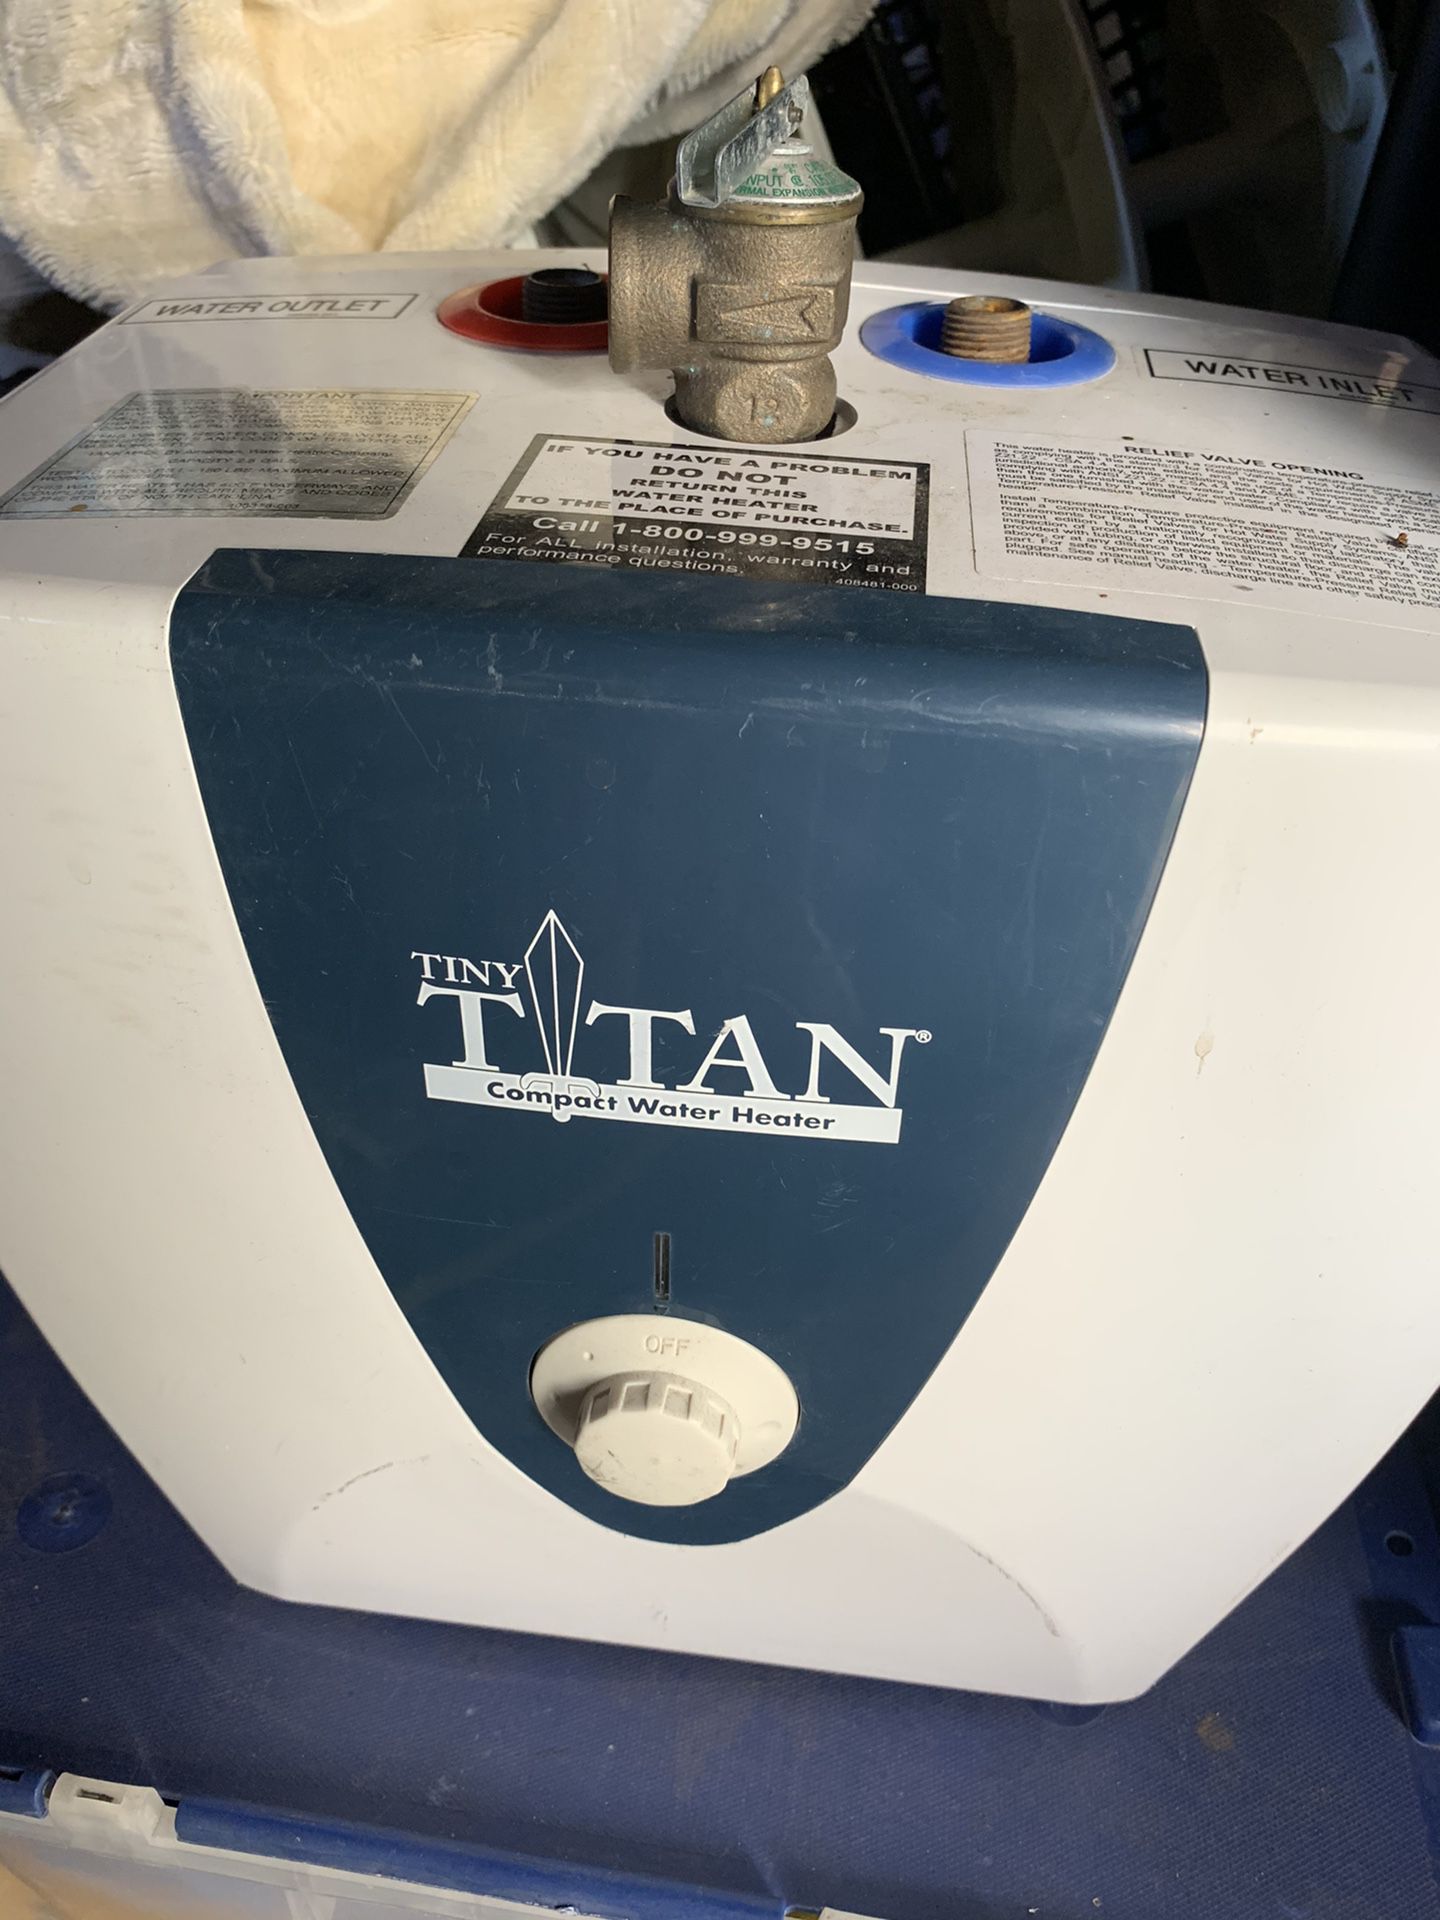 Tiny Titan hot water heater